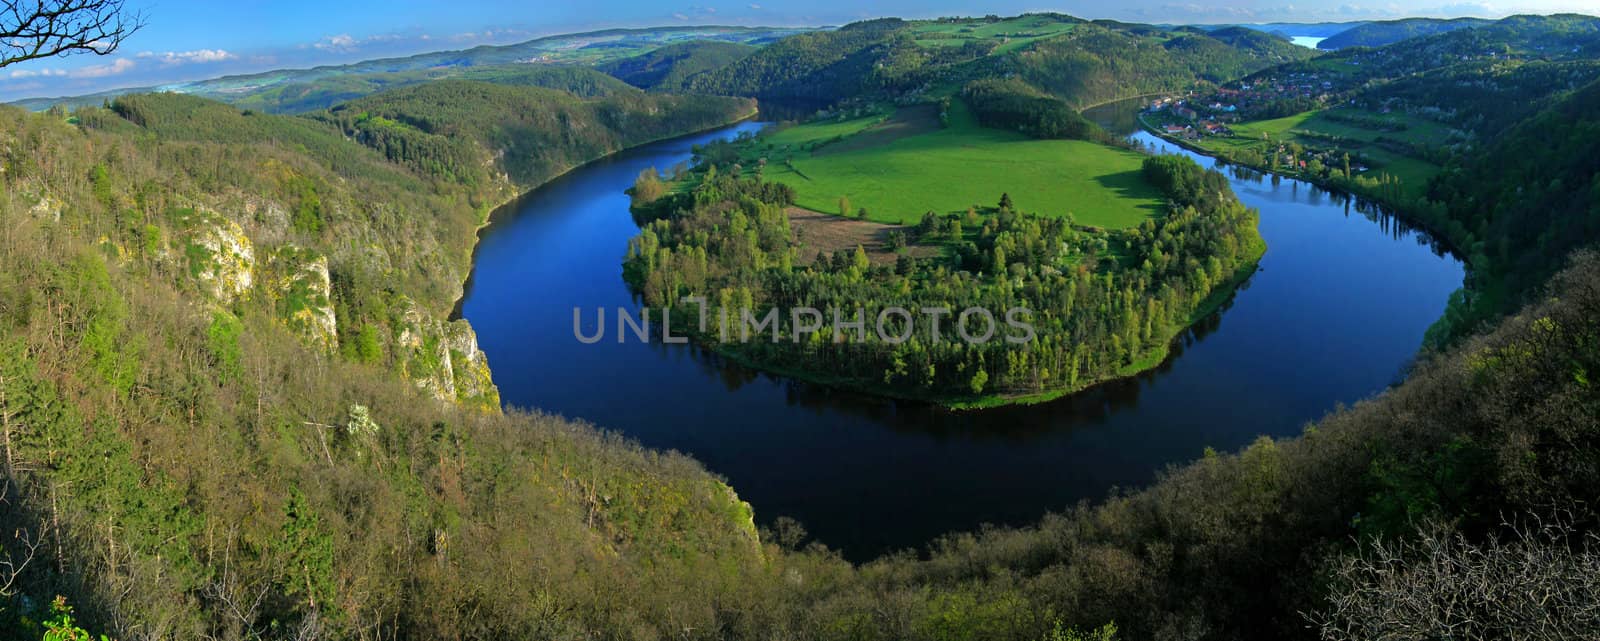 Horseshoe bend of the river Vltava in the Czech republic